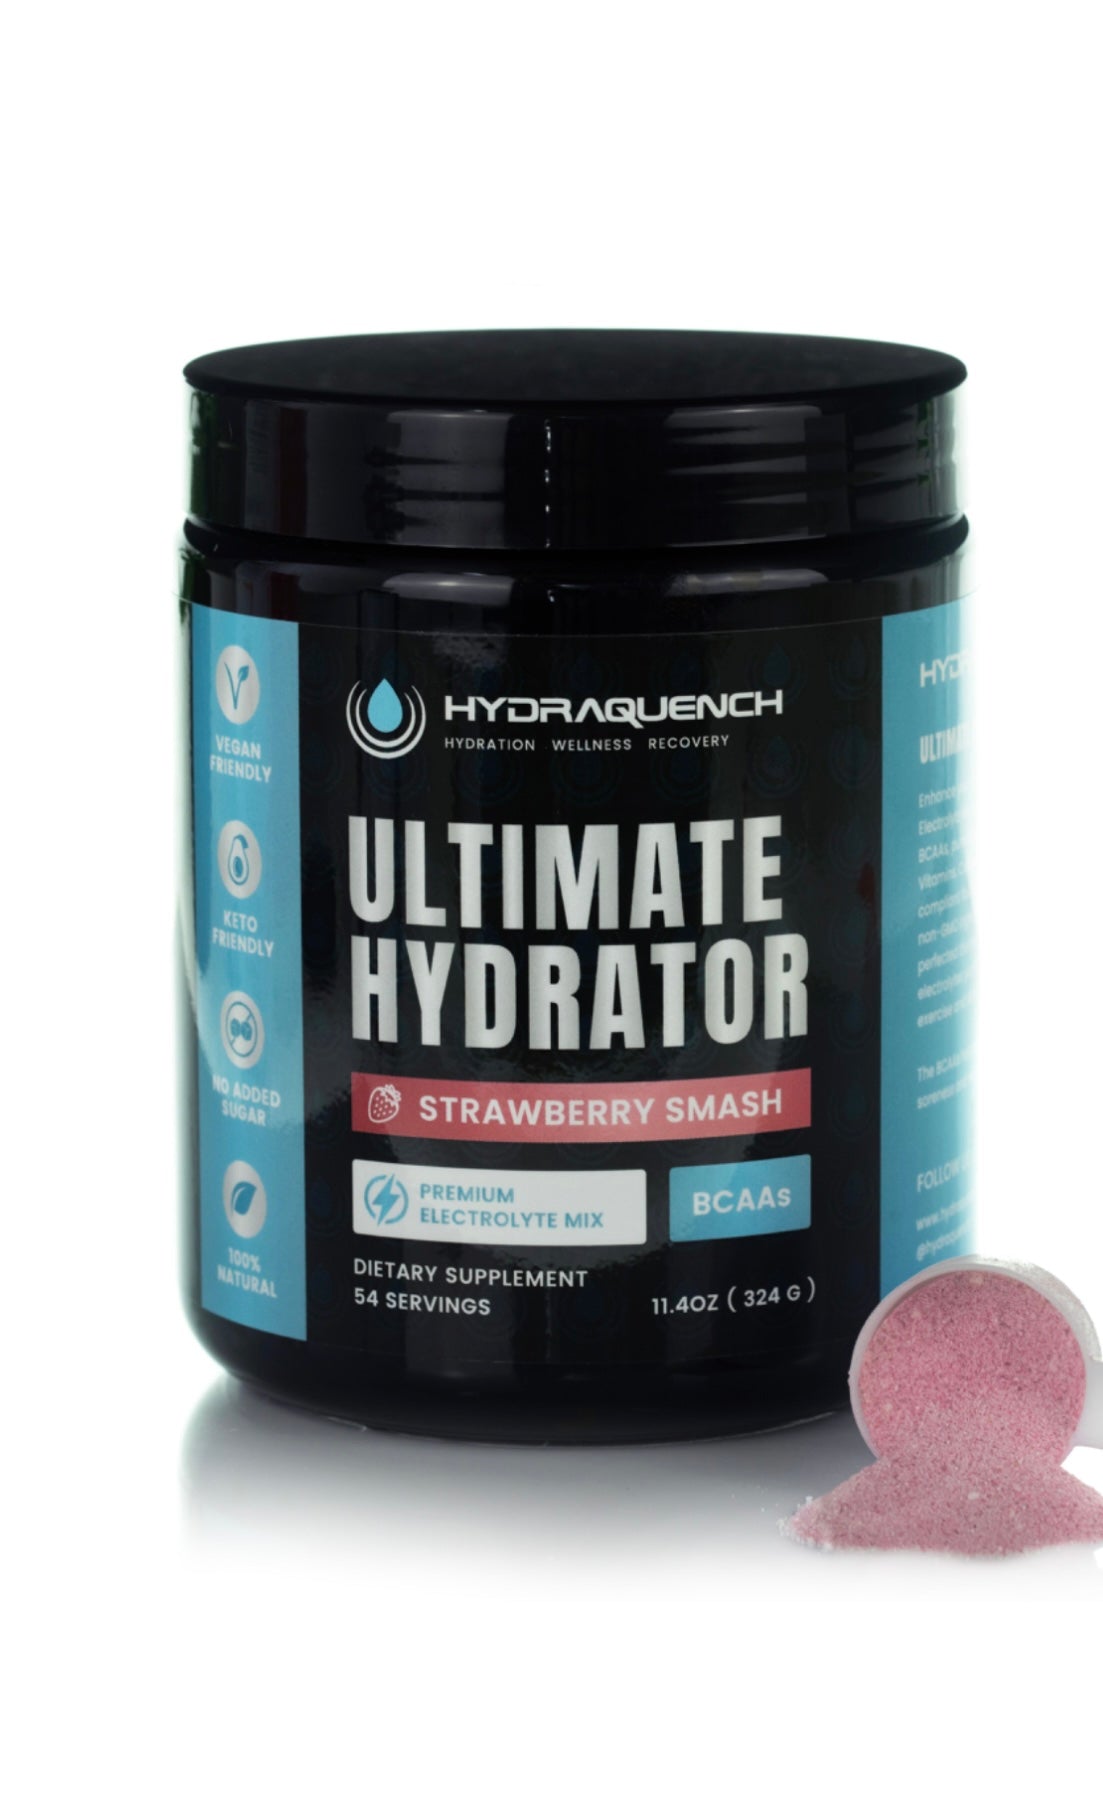 ULTIMATE HYDRATOR Hydration Drink Mix